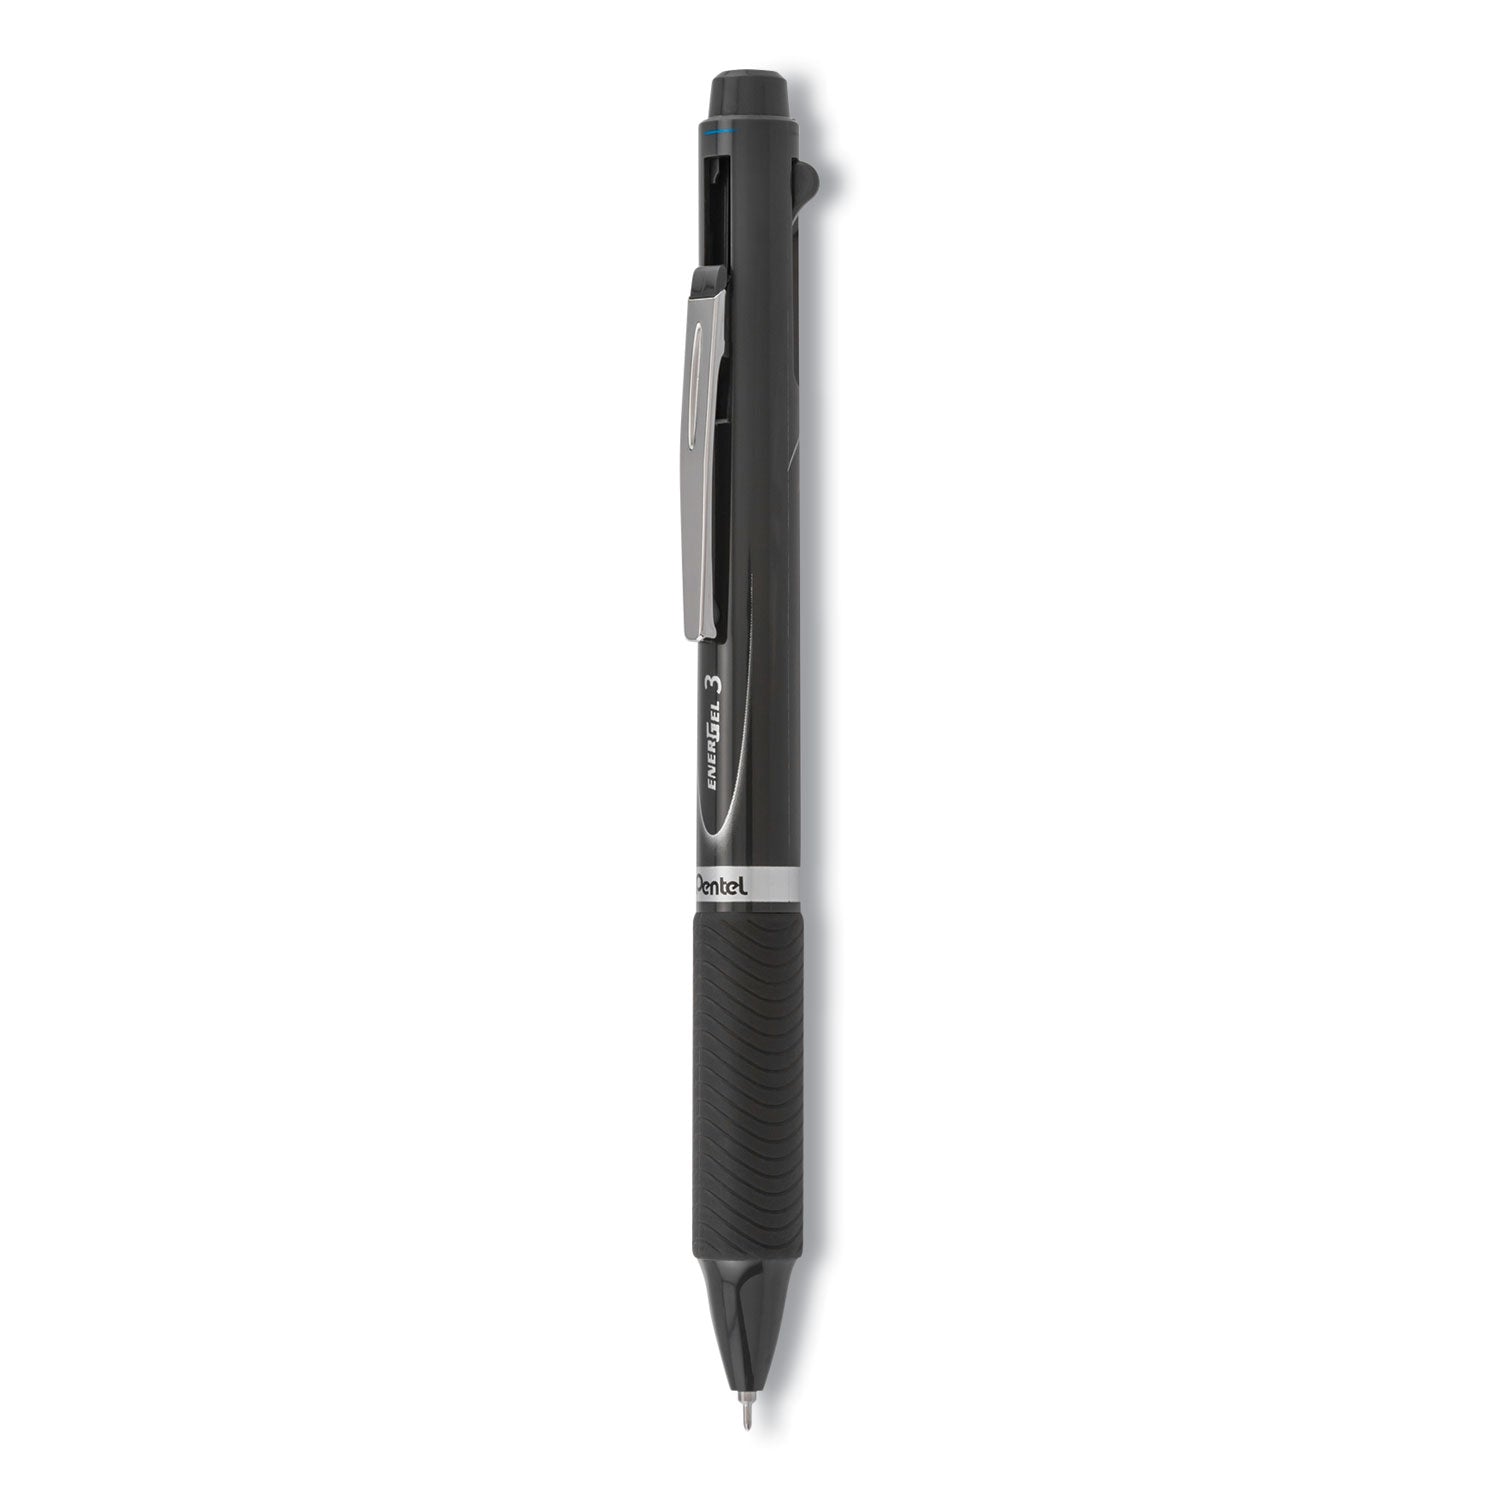 energel-3-multi-color-gel-pen-retractable-fine-05-mm-black-blue-red-ink-gray-barrel_penblc35n - 1